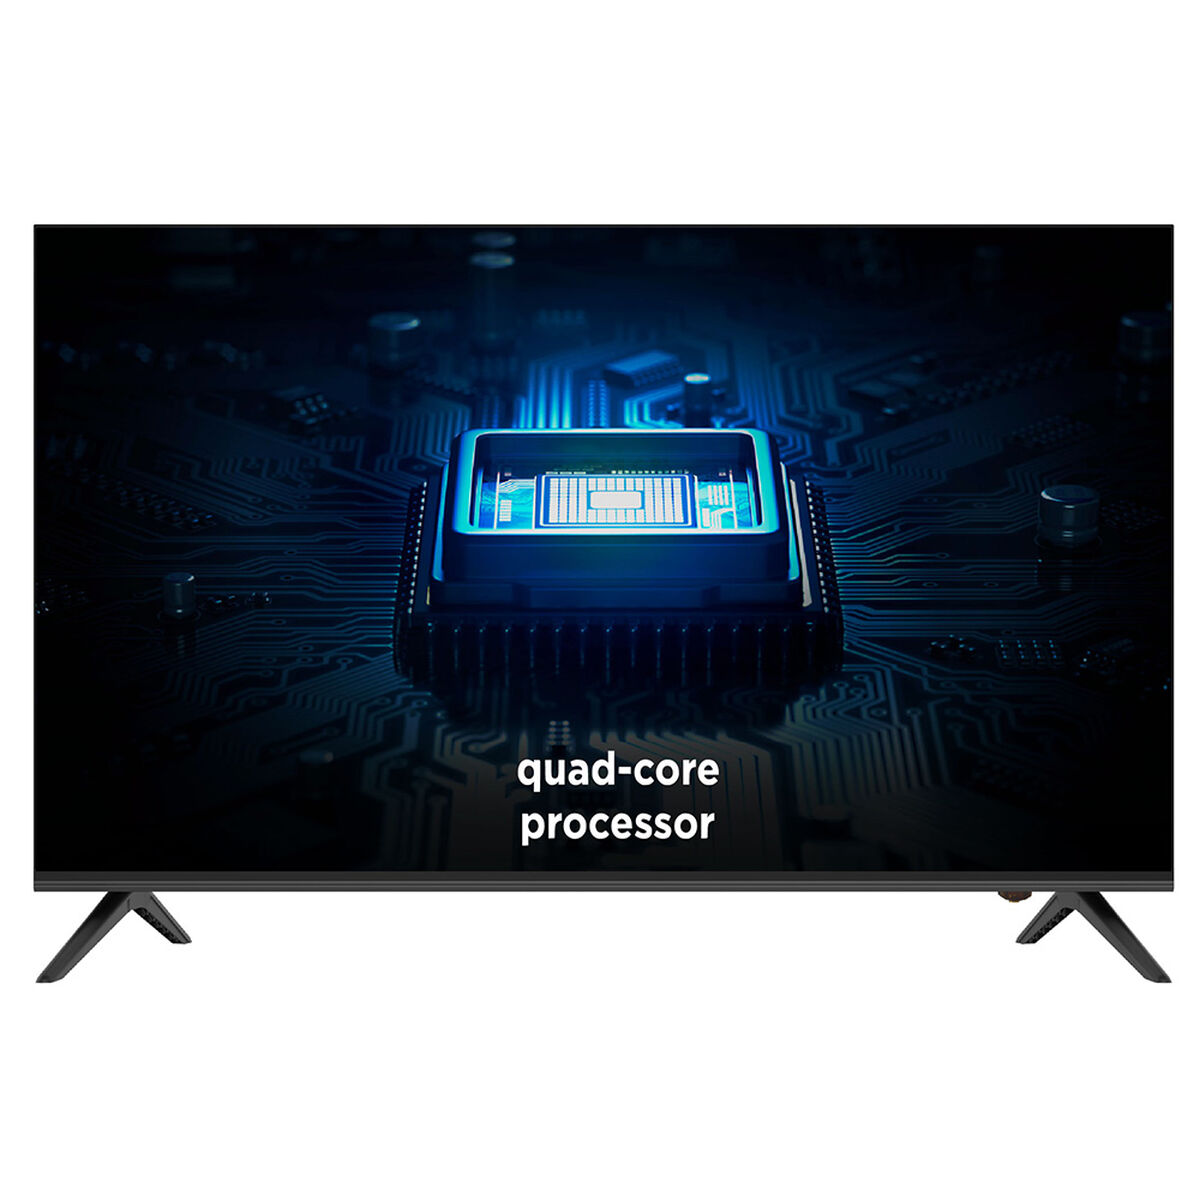 LED 55" Caixun CS55S1USM Smart TV UHD